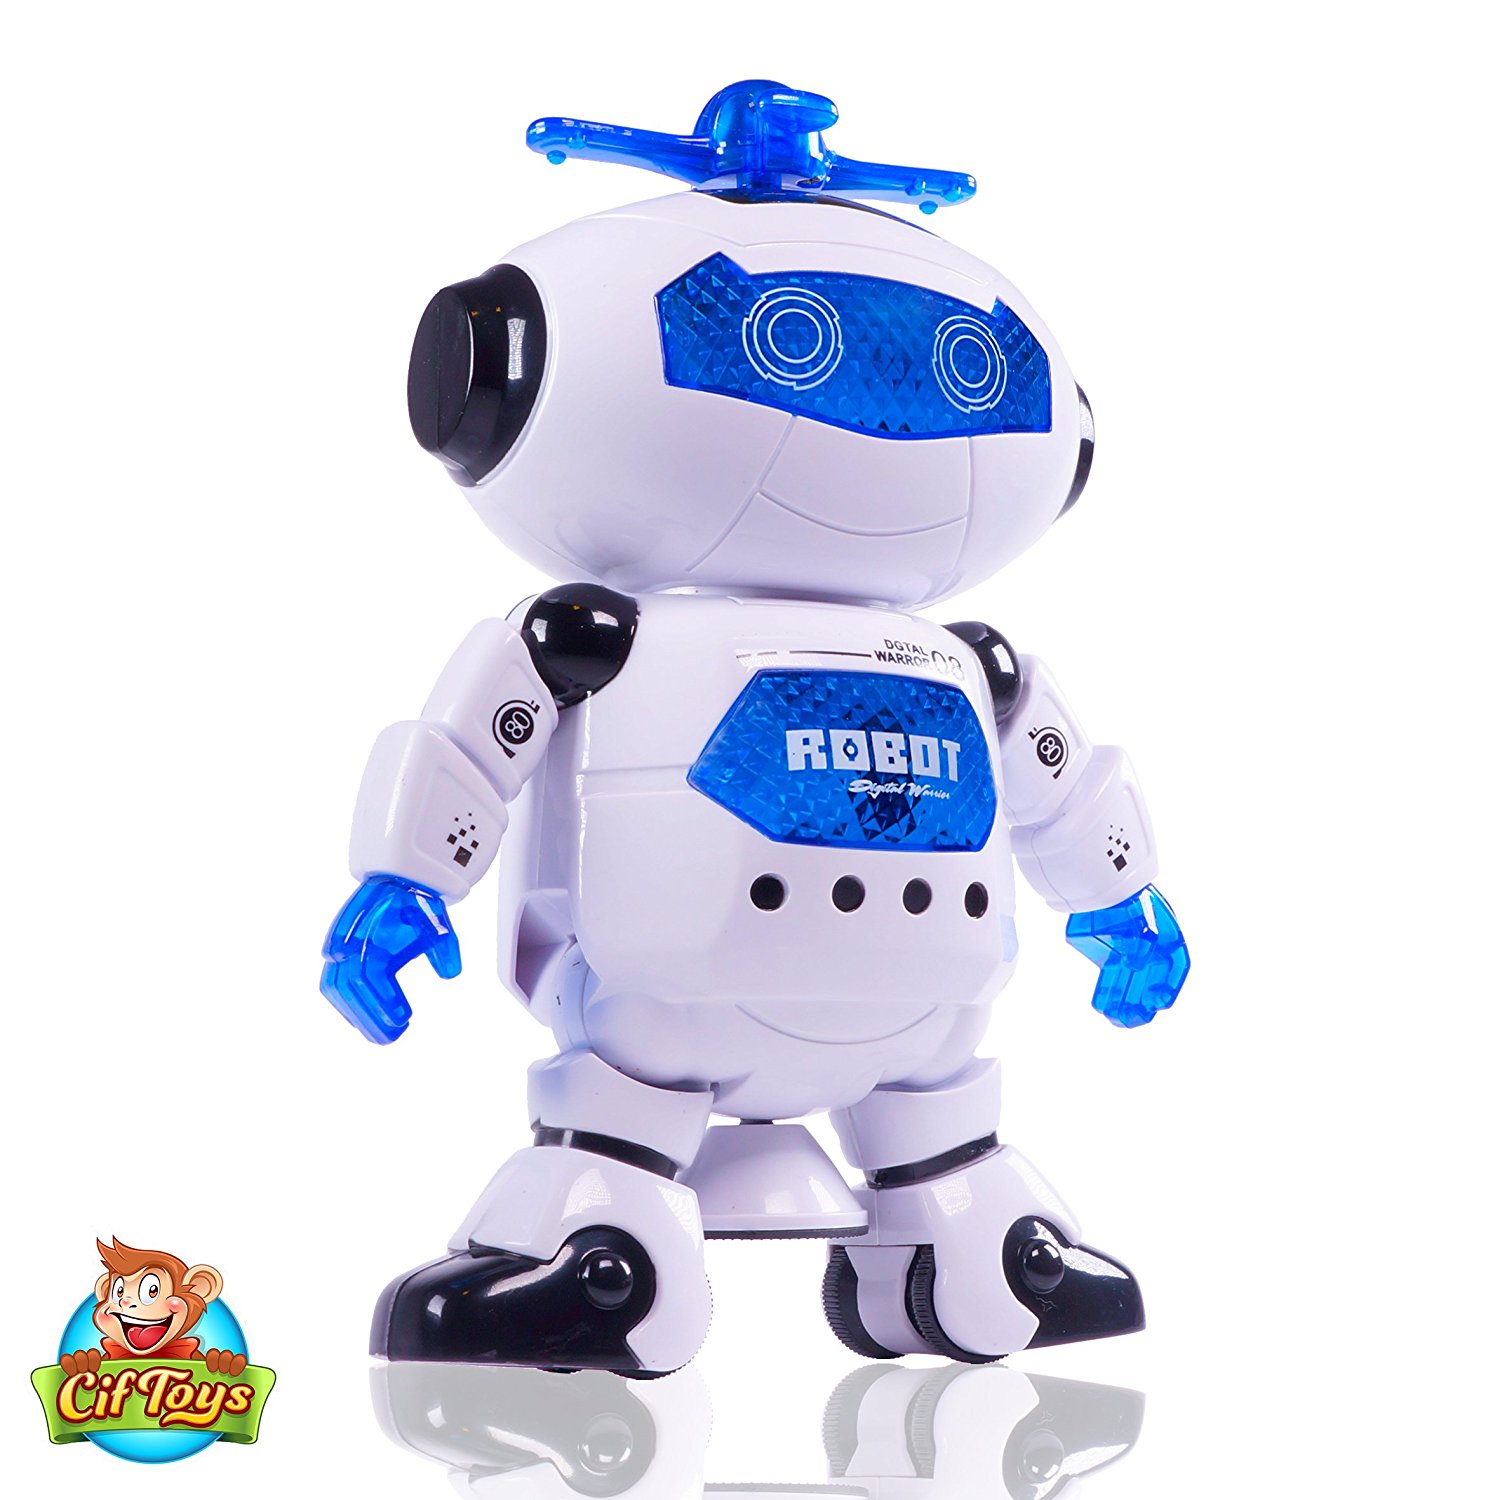 Toys For Boys Girls Robot Kids Robot Flashing Dancing Musical Toy Christmas Gift 